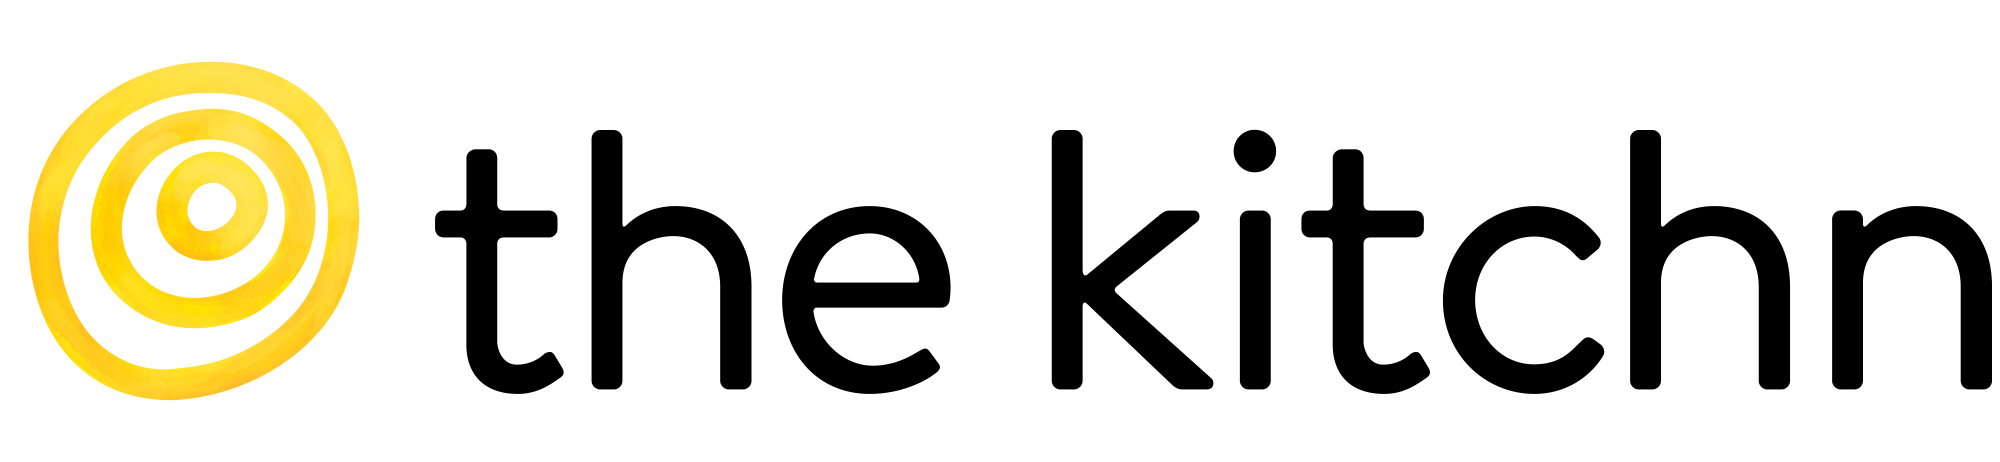 thekitchn-logo.png